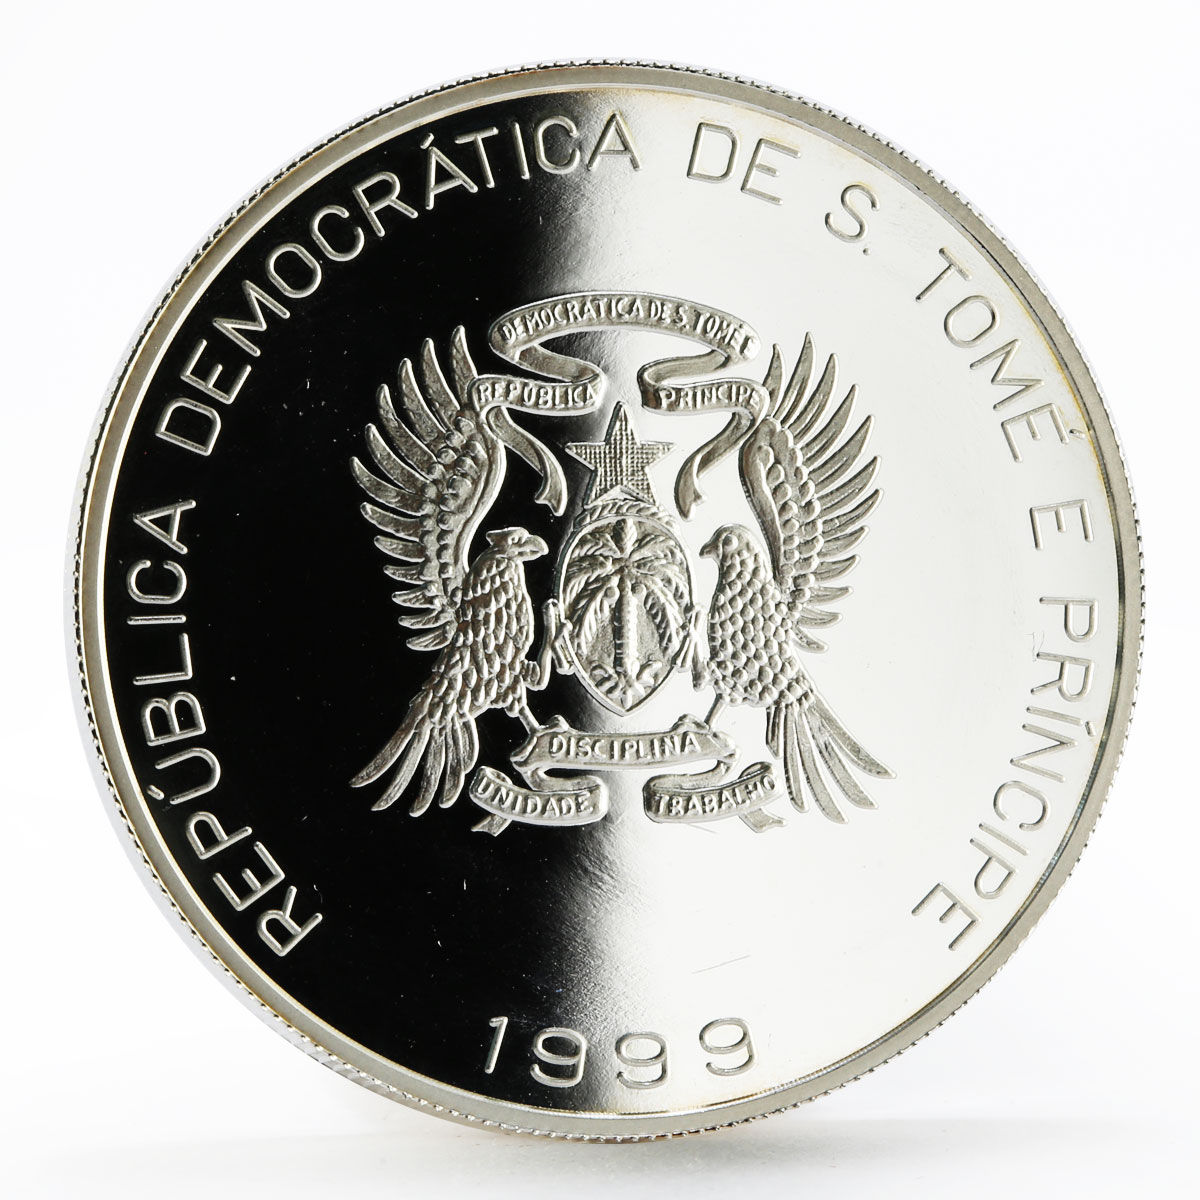 Sao Tome and Principe 2000 dobras Year of the Euro 50 Groschen bimetal coin 1999